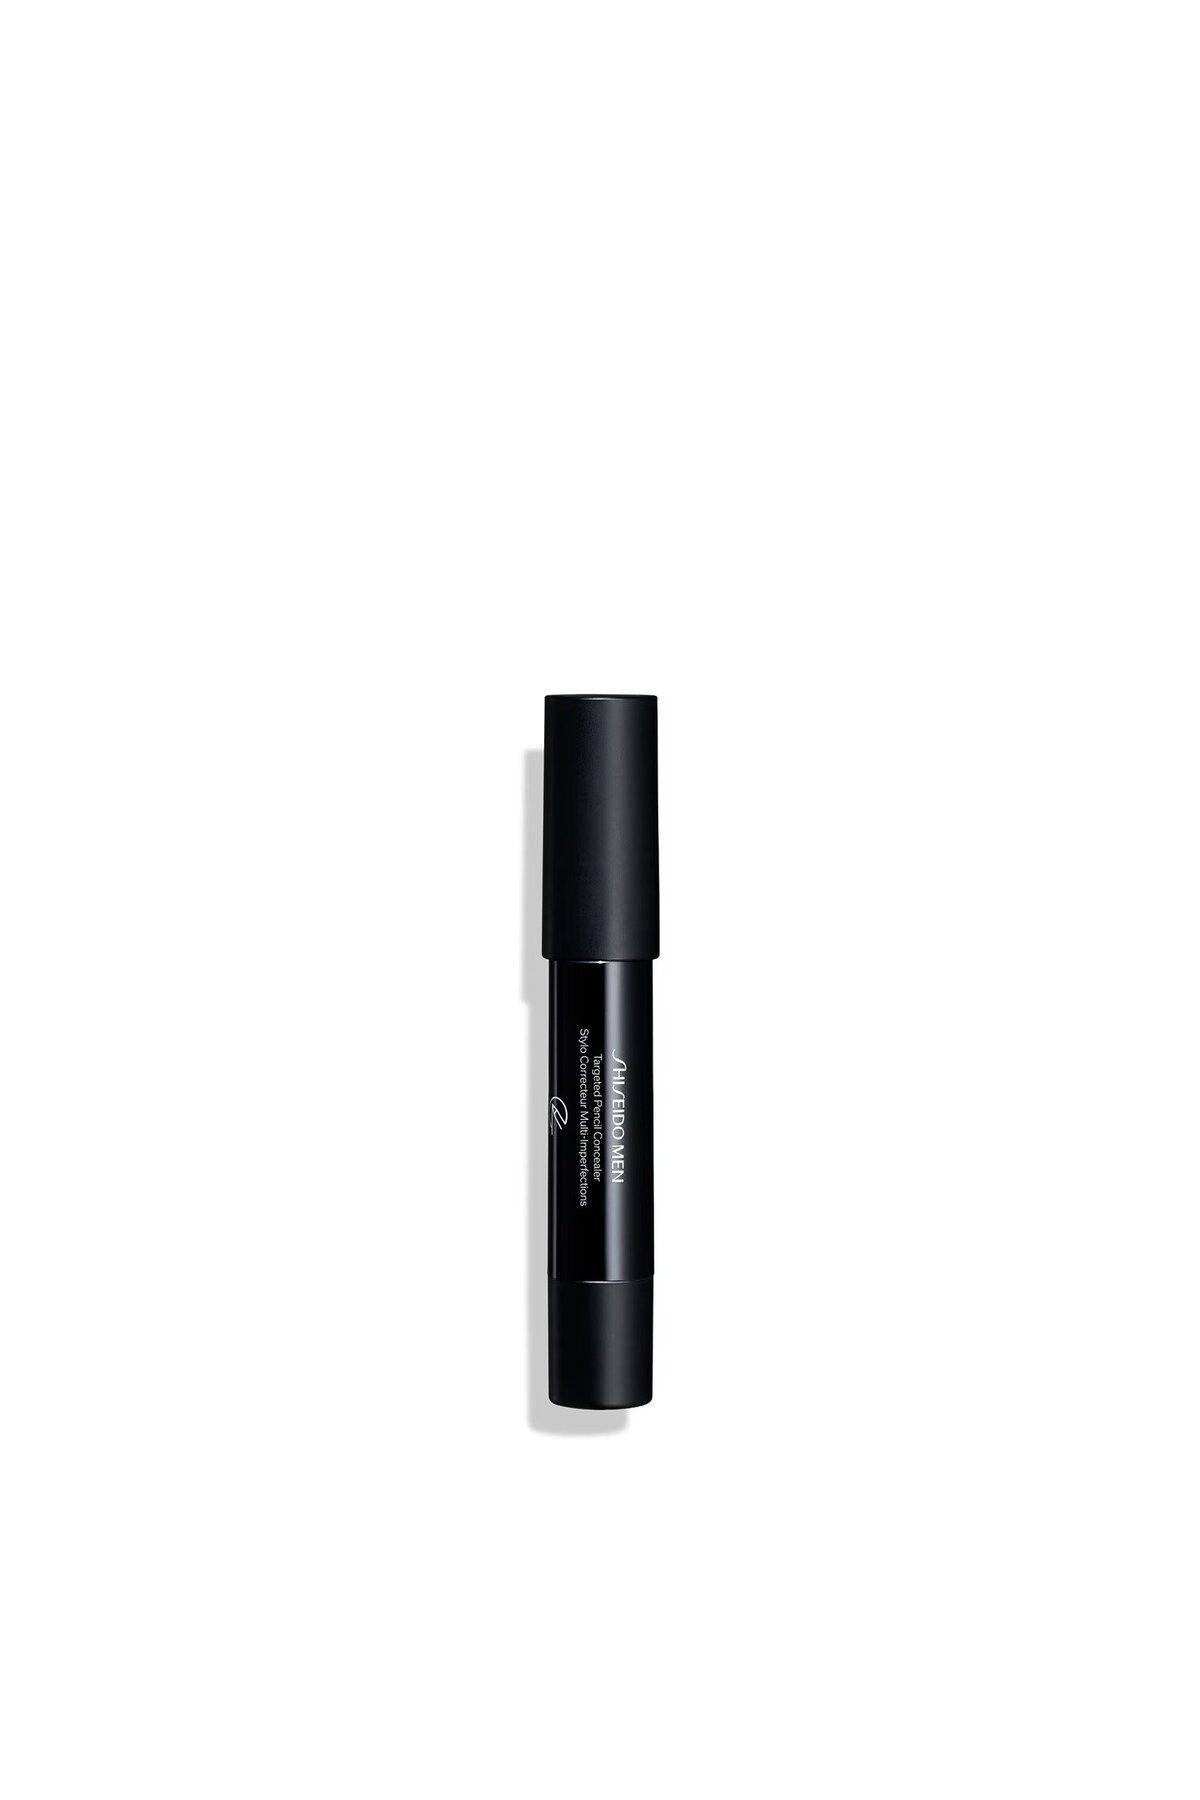 Shiseido کانسیلر مدادی مخصوص مردان مخفی کننده قرمزی پوست ناهموار ۳۰ گرم